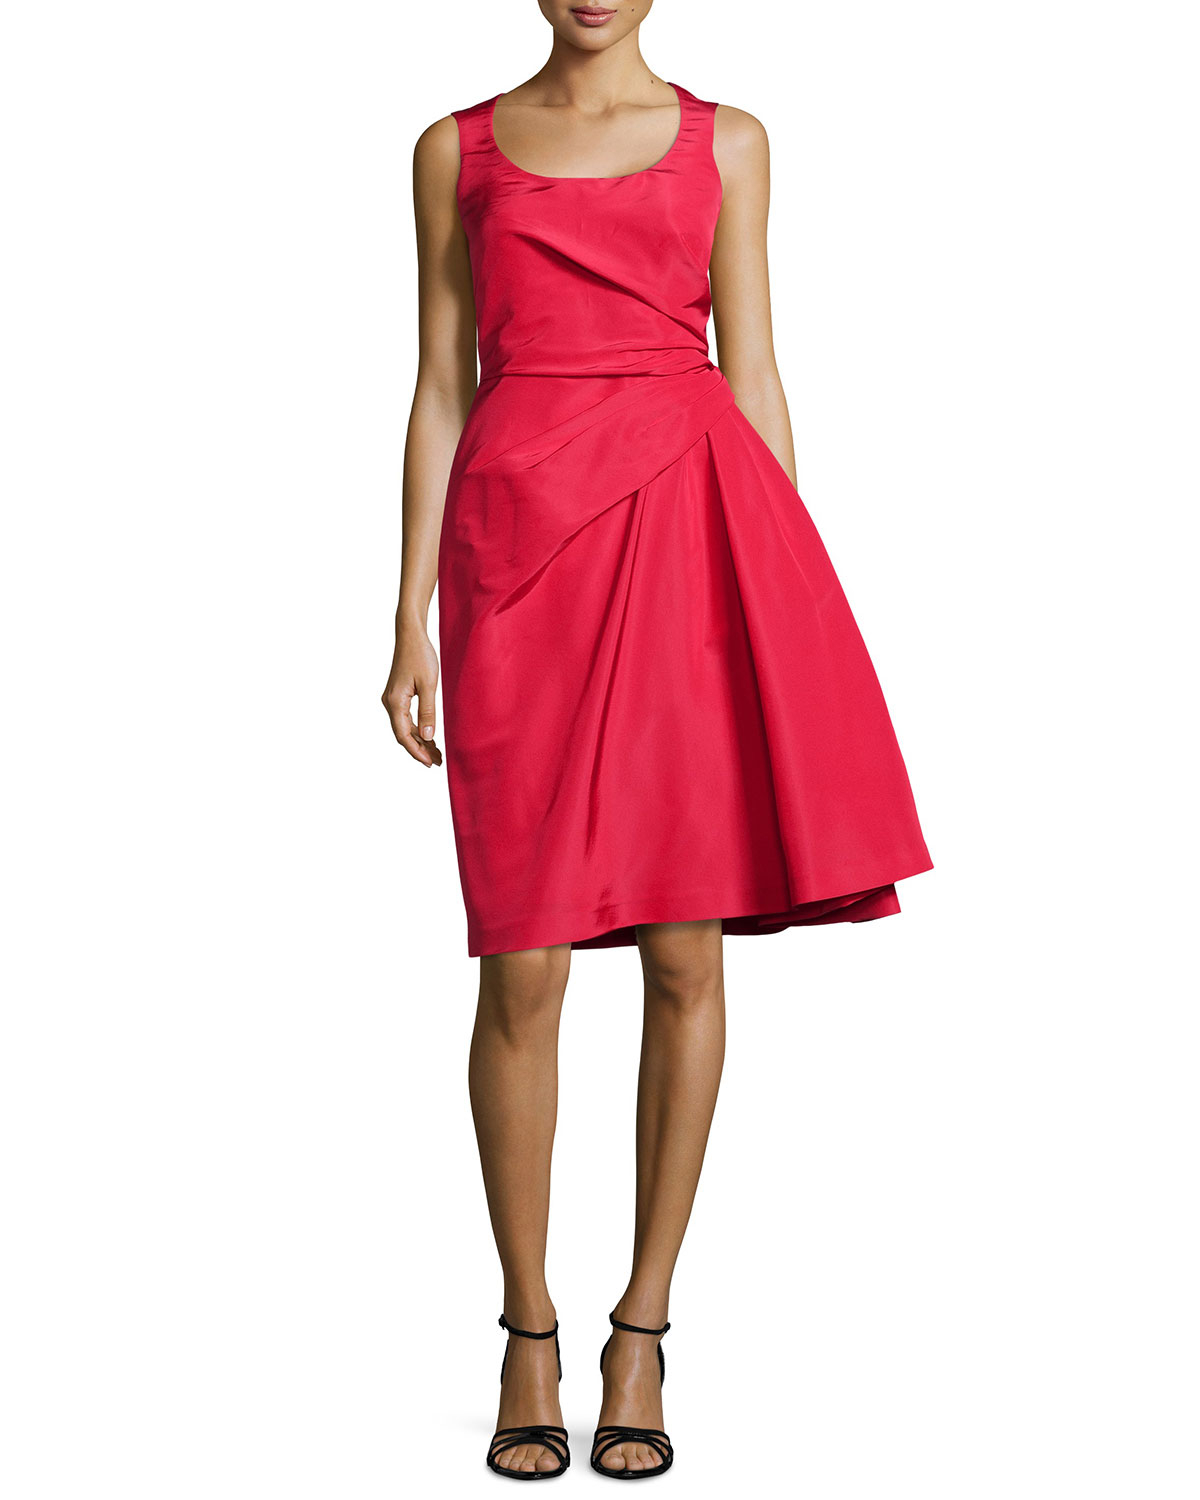 Lyst - Carolina Herrera Sleeveless Dress With Pickup Skirt & Bow in Red